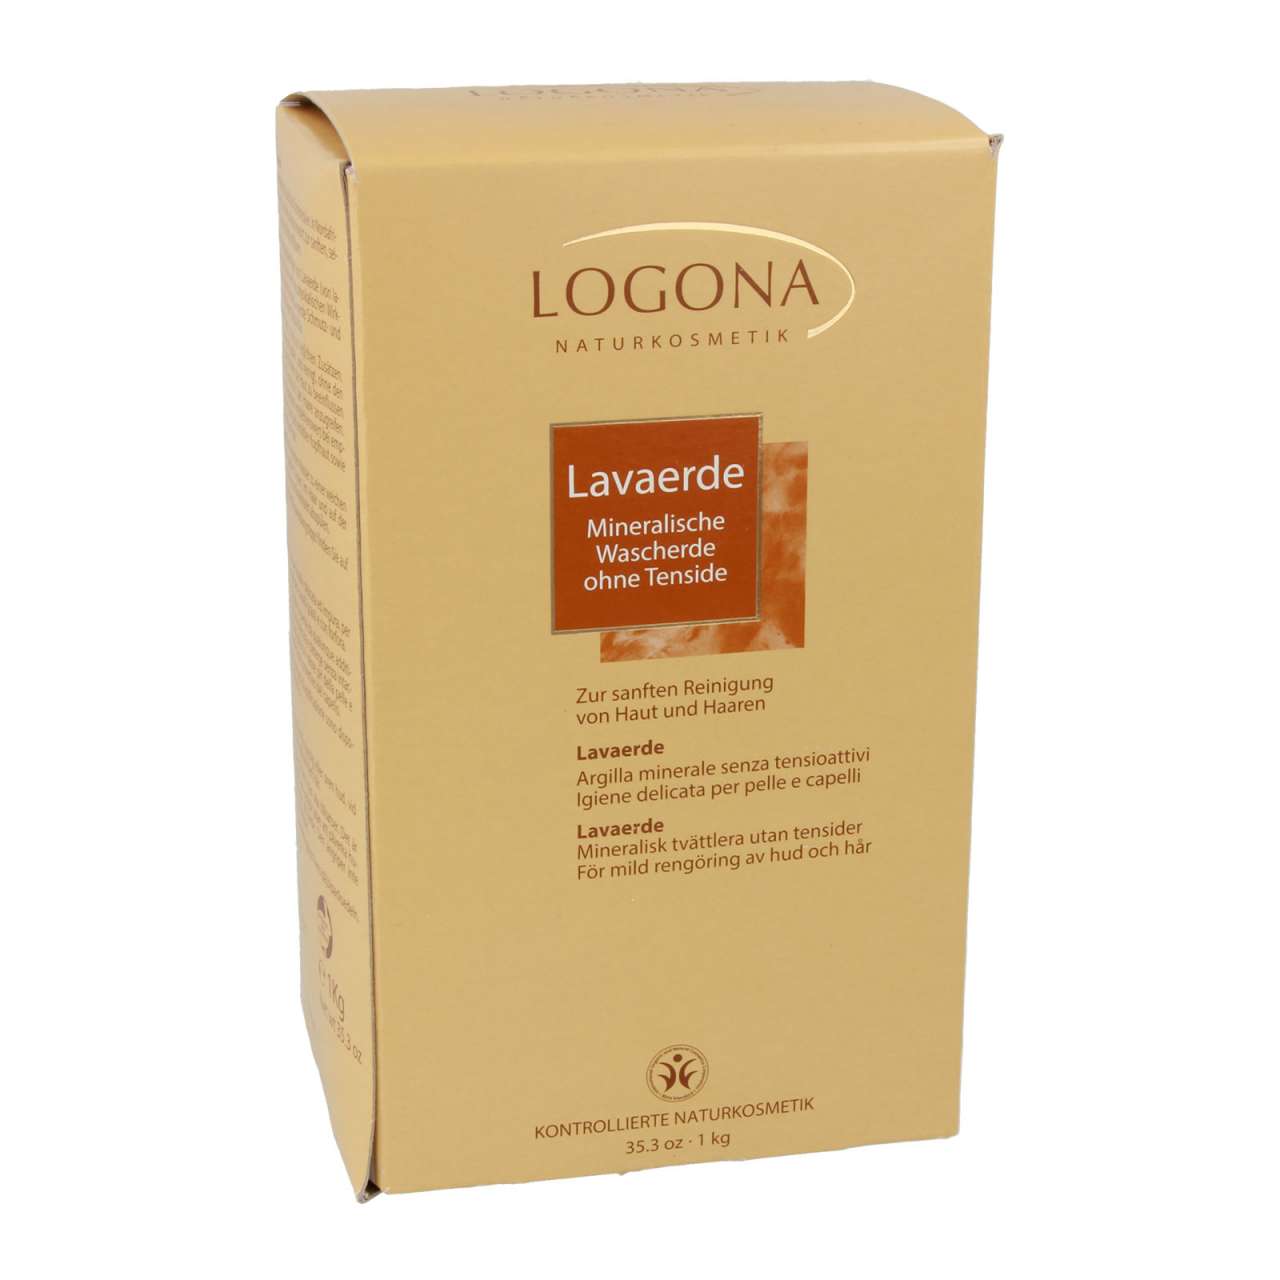 Logona Hair Dye, Shampoo, Conditioner & More - Fragrance Free - PureNature